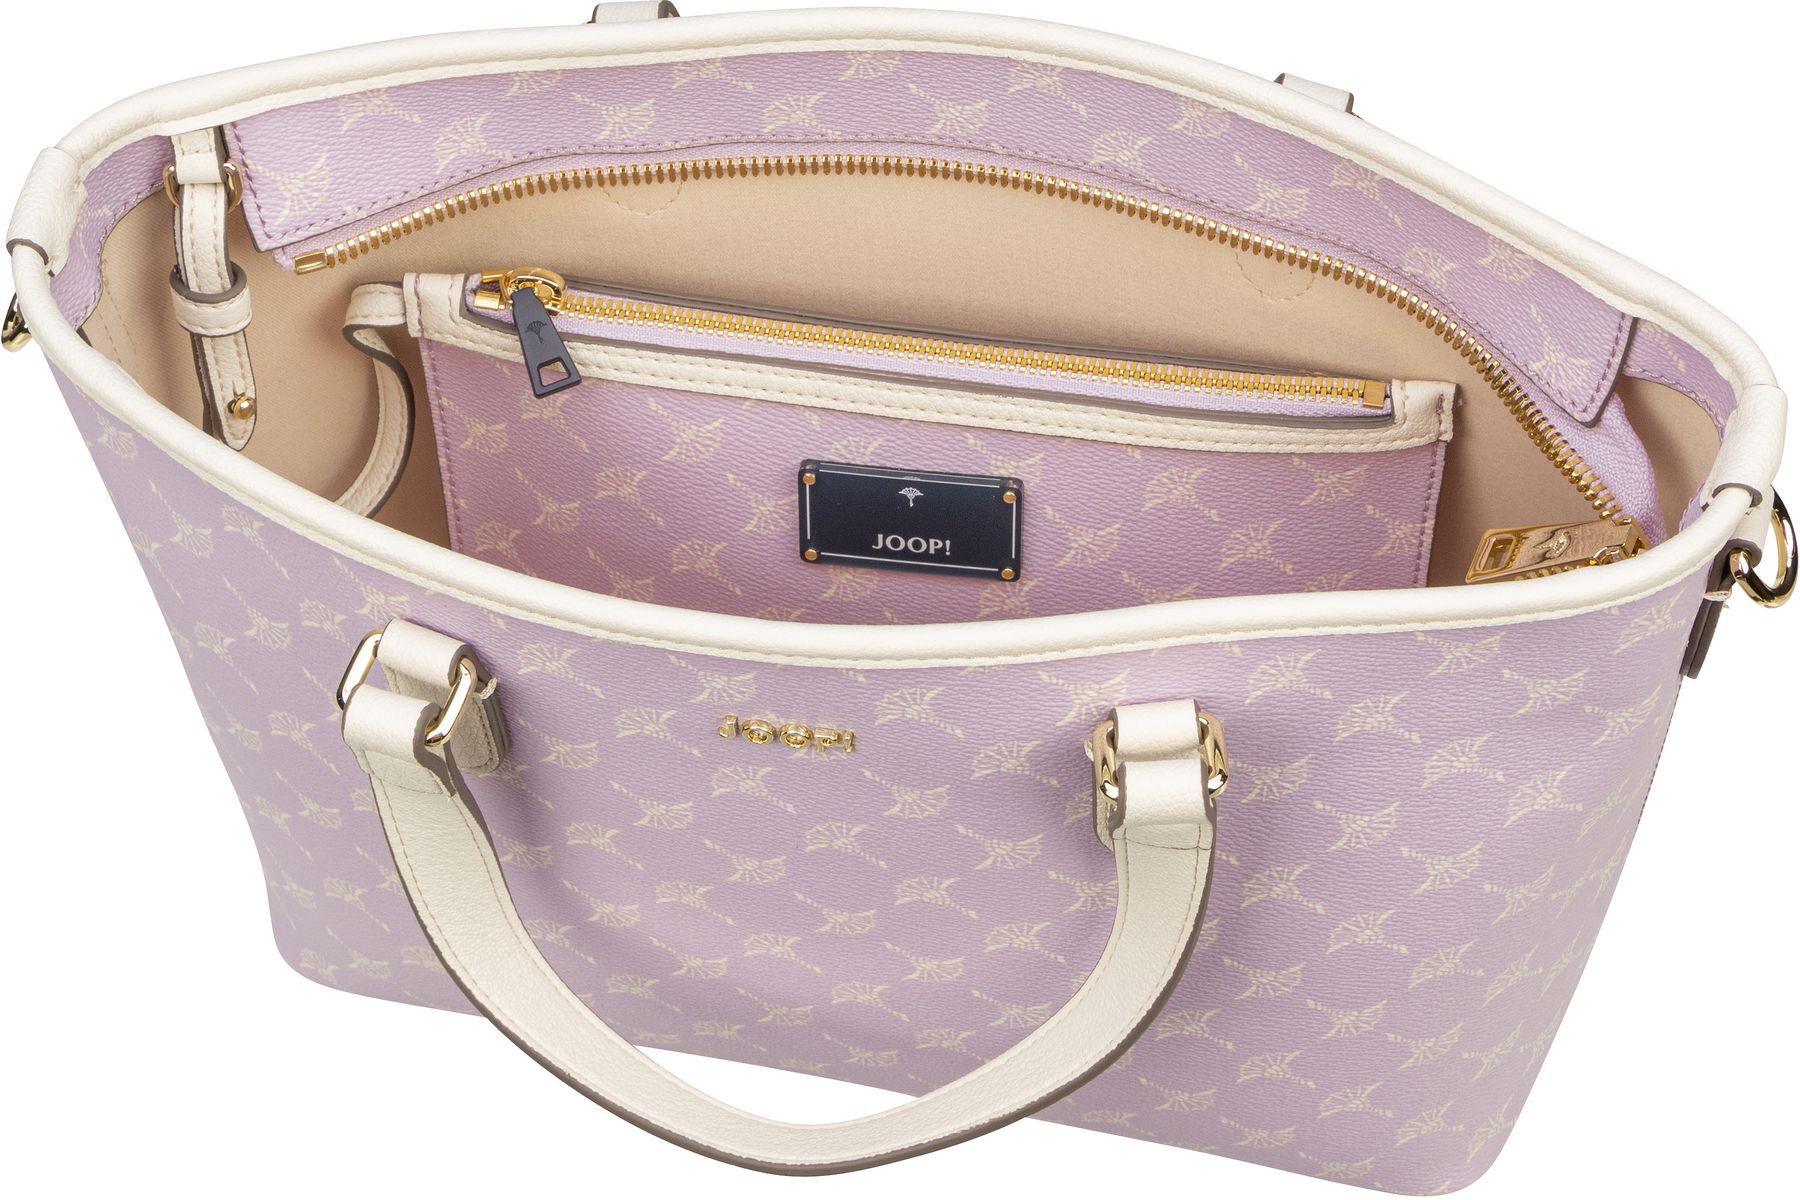 Joop Cortina Diletta Ketty Handbag SHZ - Lavender